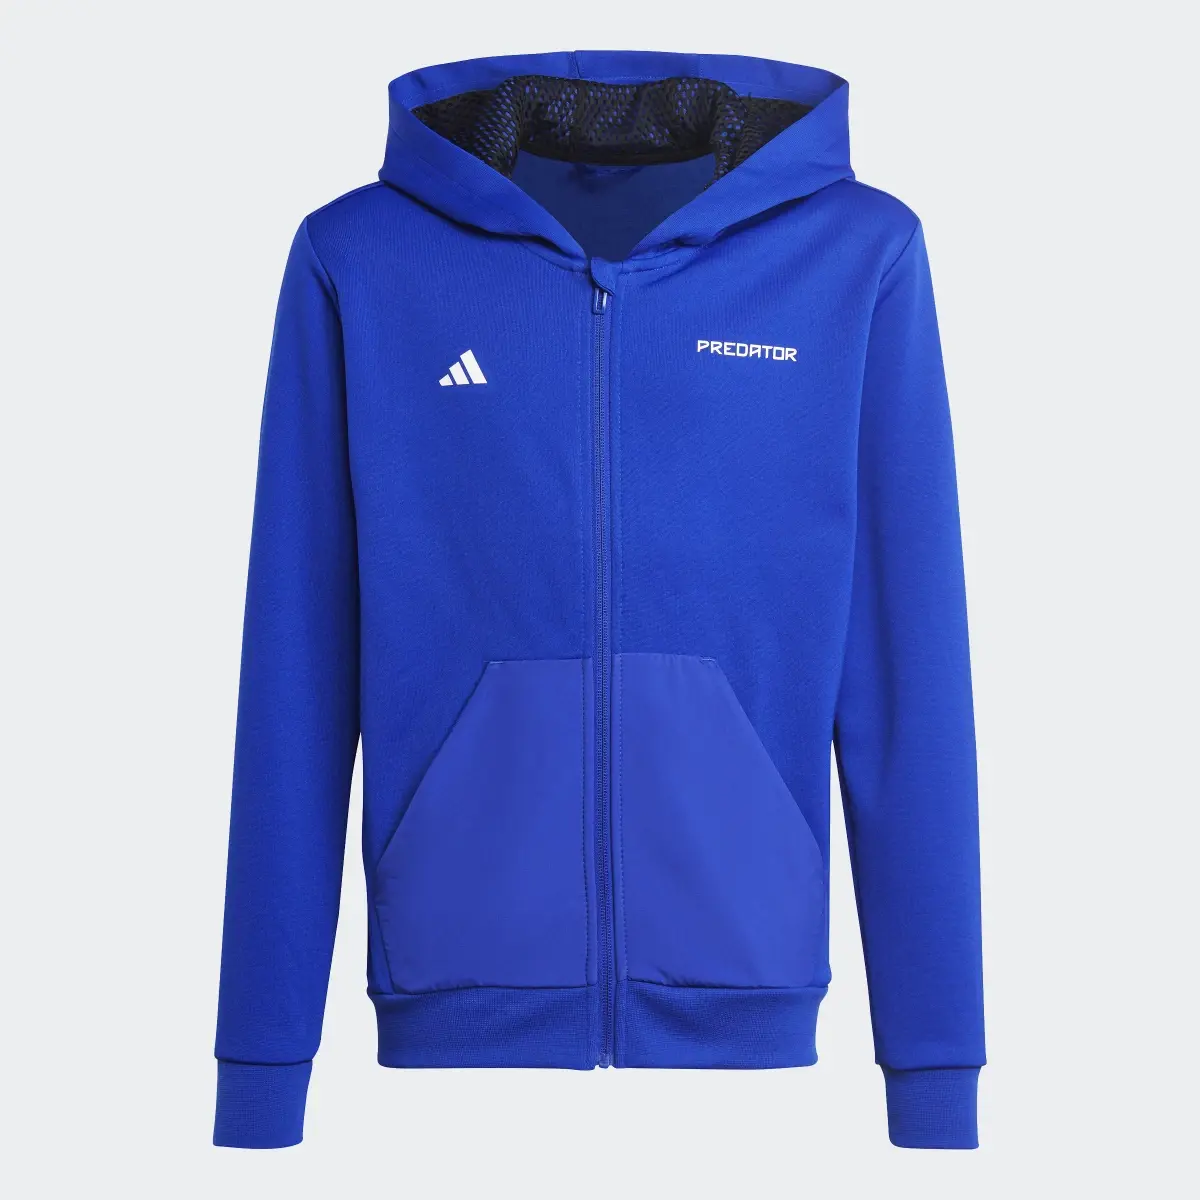 Adidas Veste à capuche entièrement zippée Football-Inspired Predator. 3